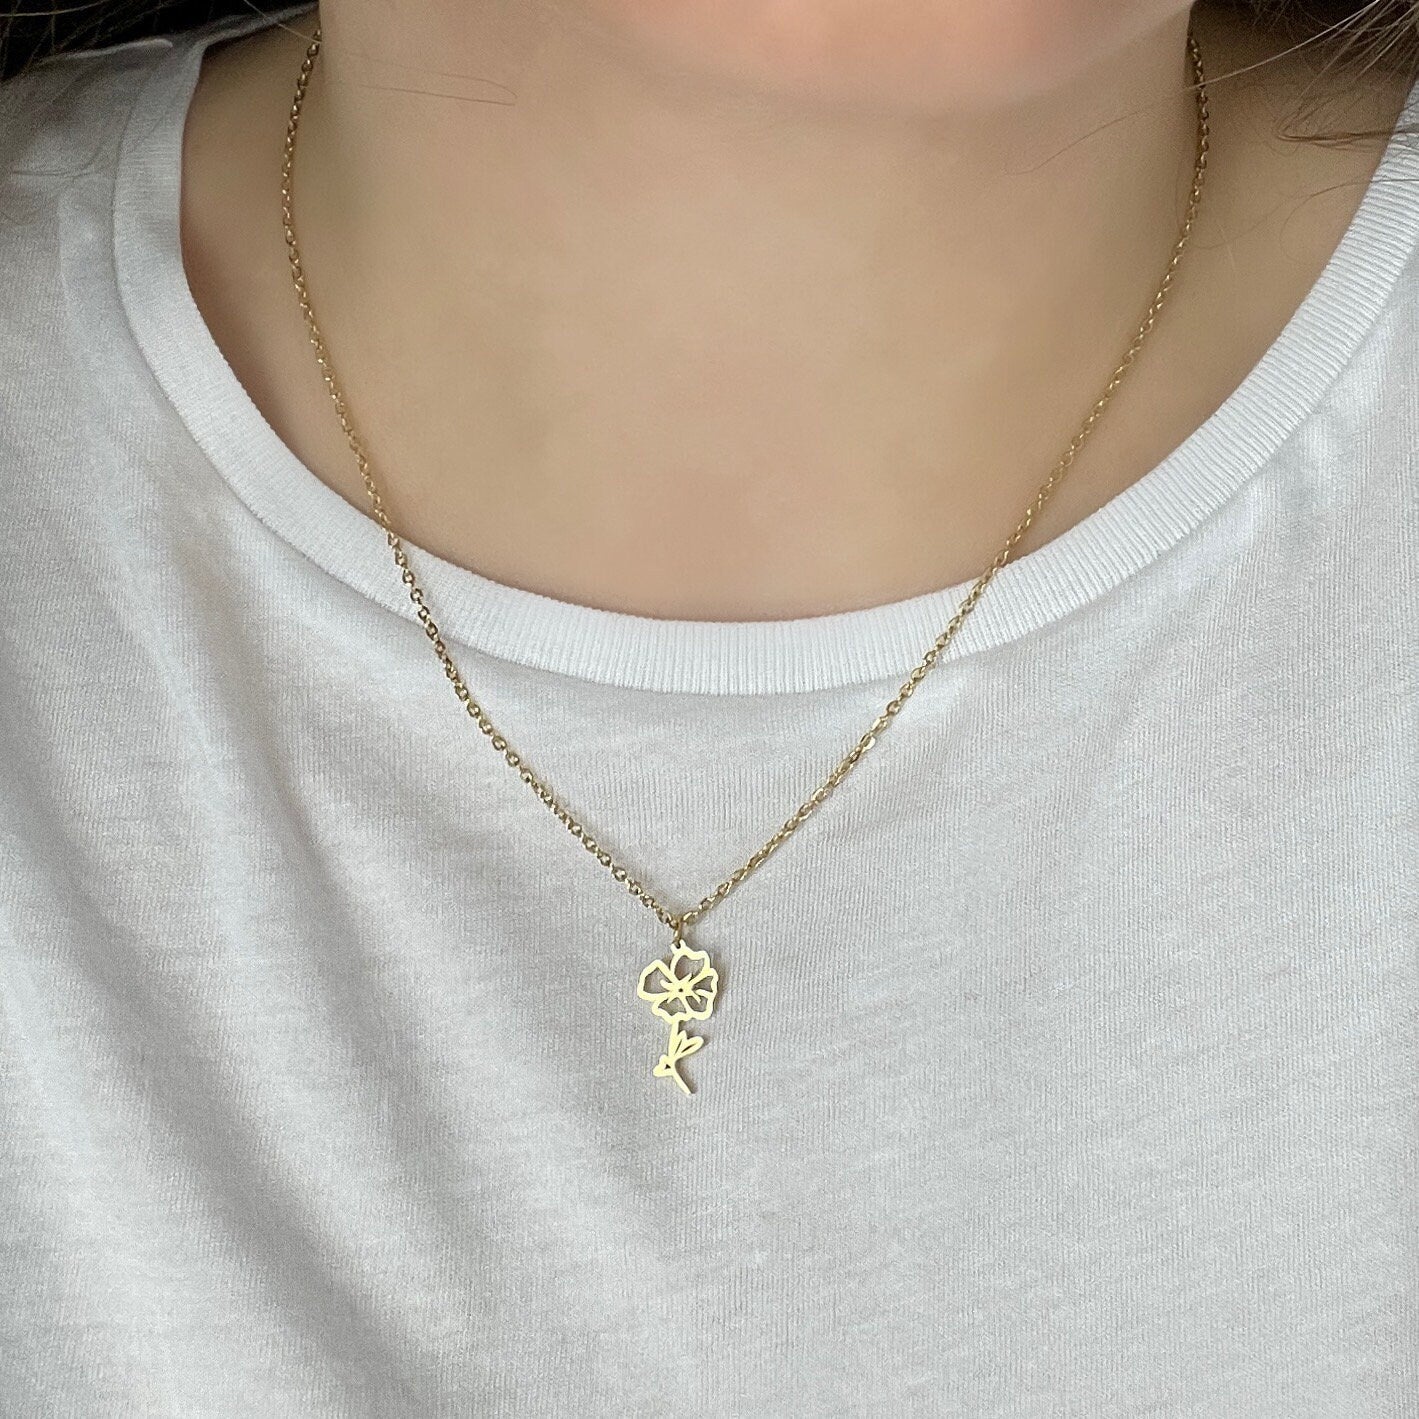 Gold Birth Flower Necklace, Custom Birthflower Charm, Minimalist Gold Layer, Gifts For Mom, M6-129